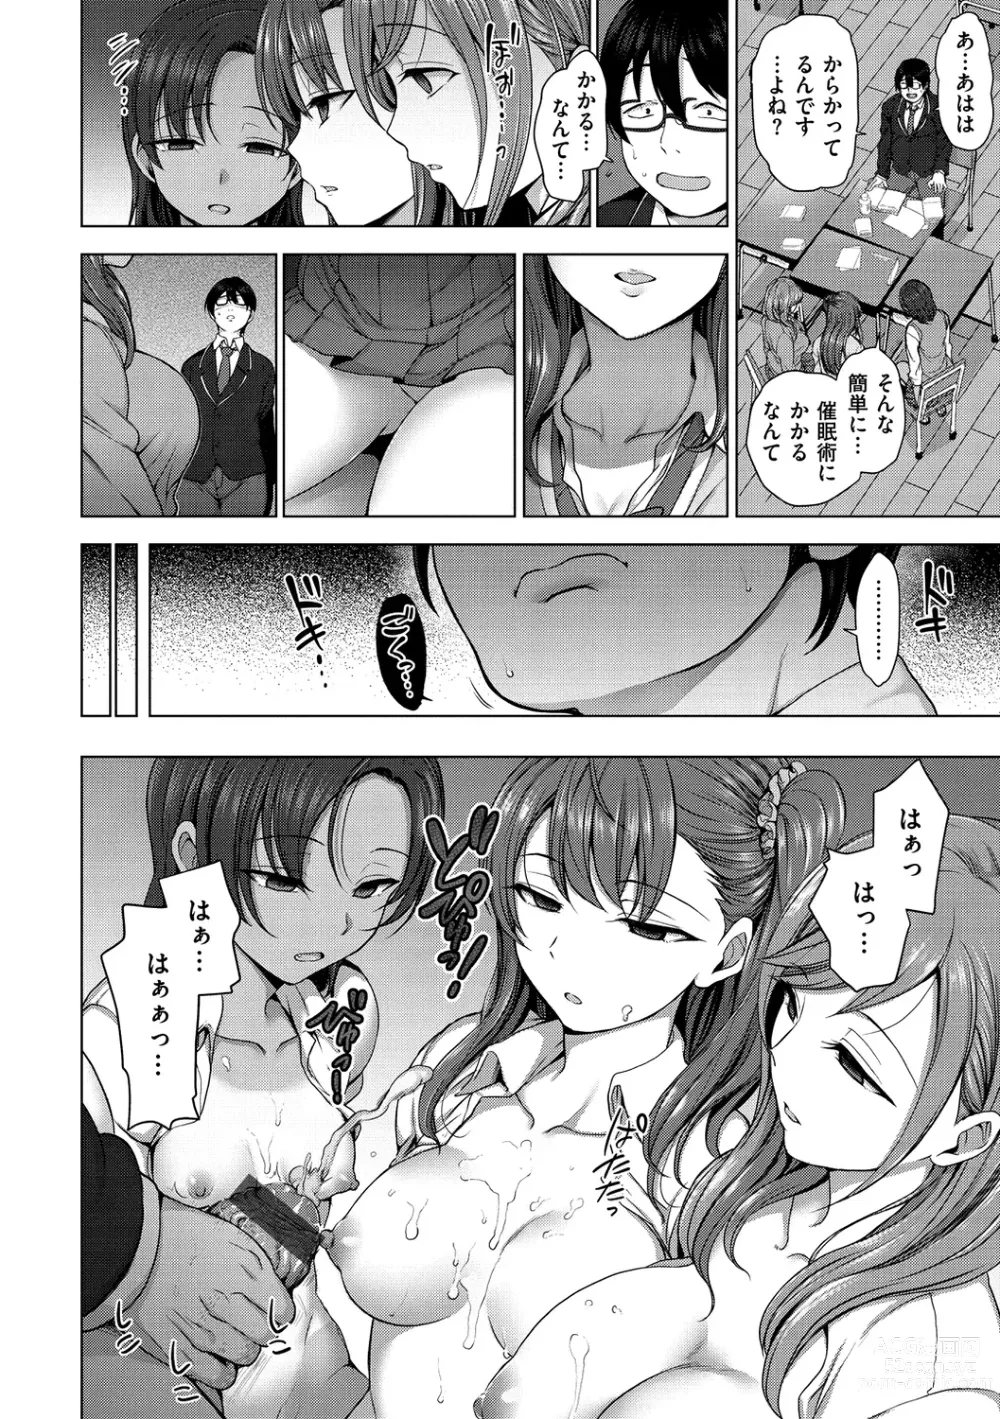 Page 14 of manga Ijirare